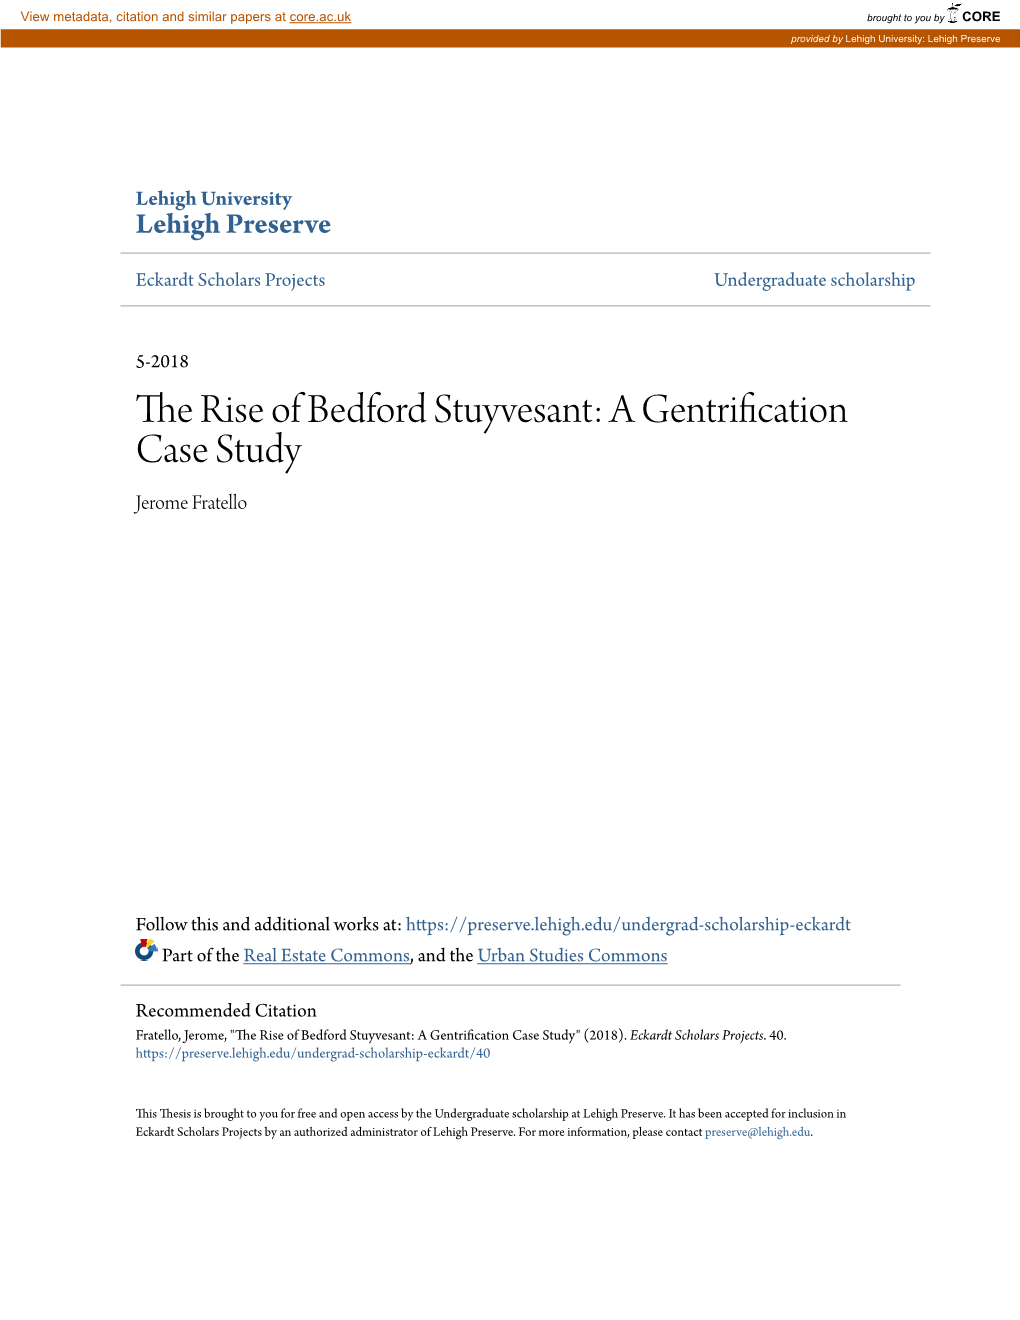 The Rise of Bedford Stuyvesant: a Gentrification Case Study Jerome Fratello